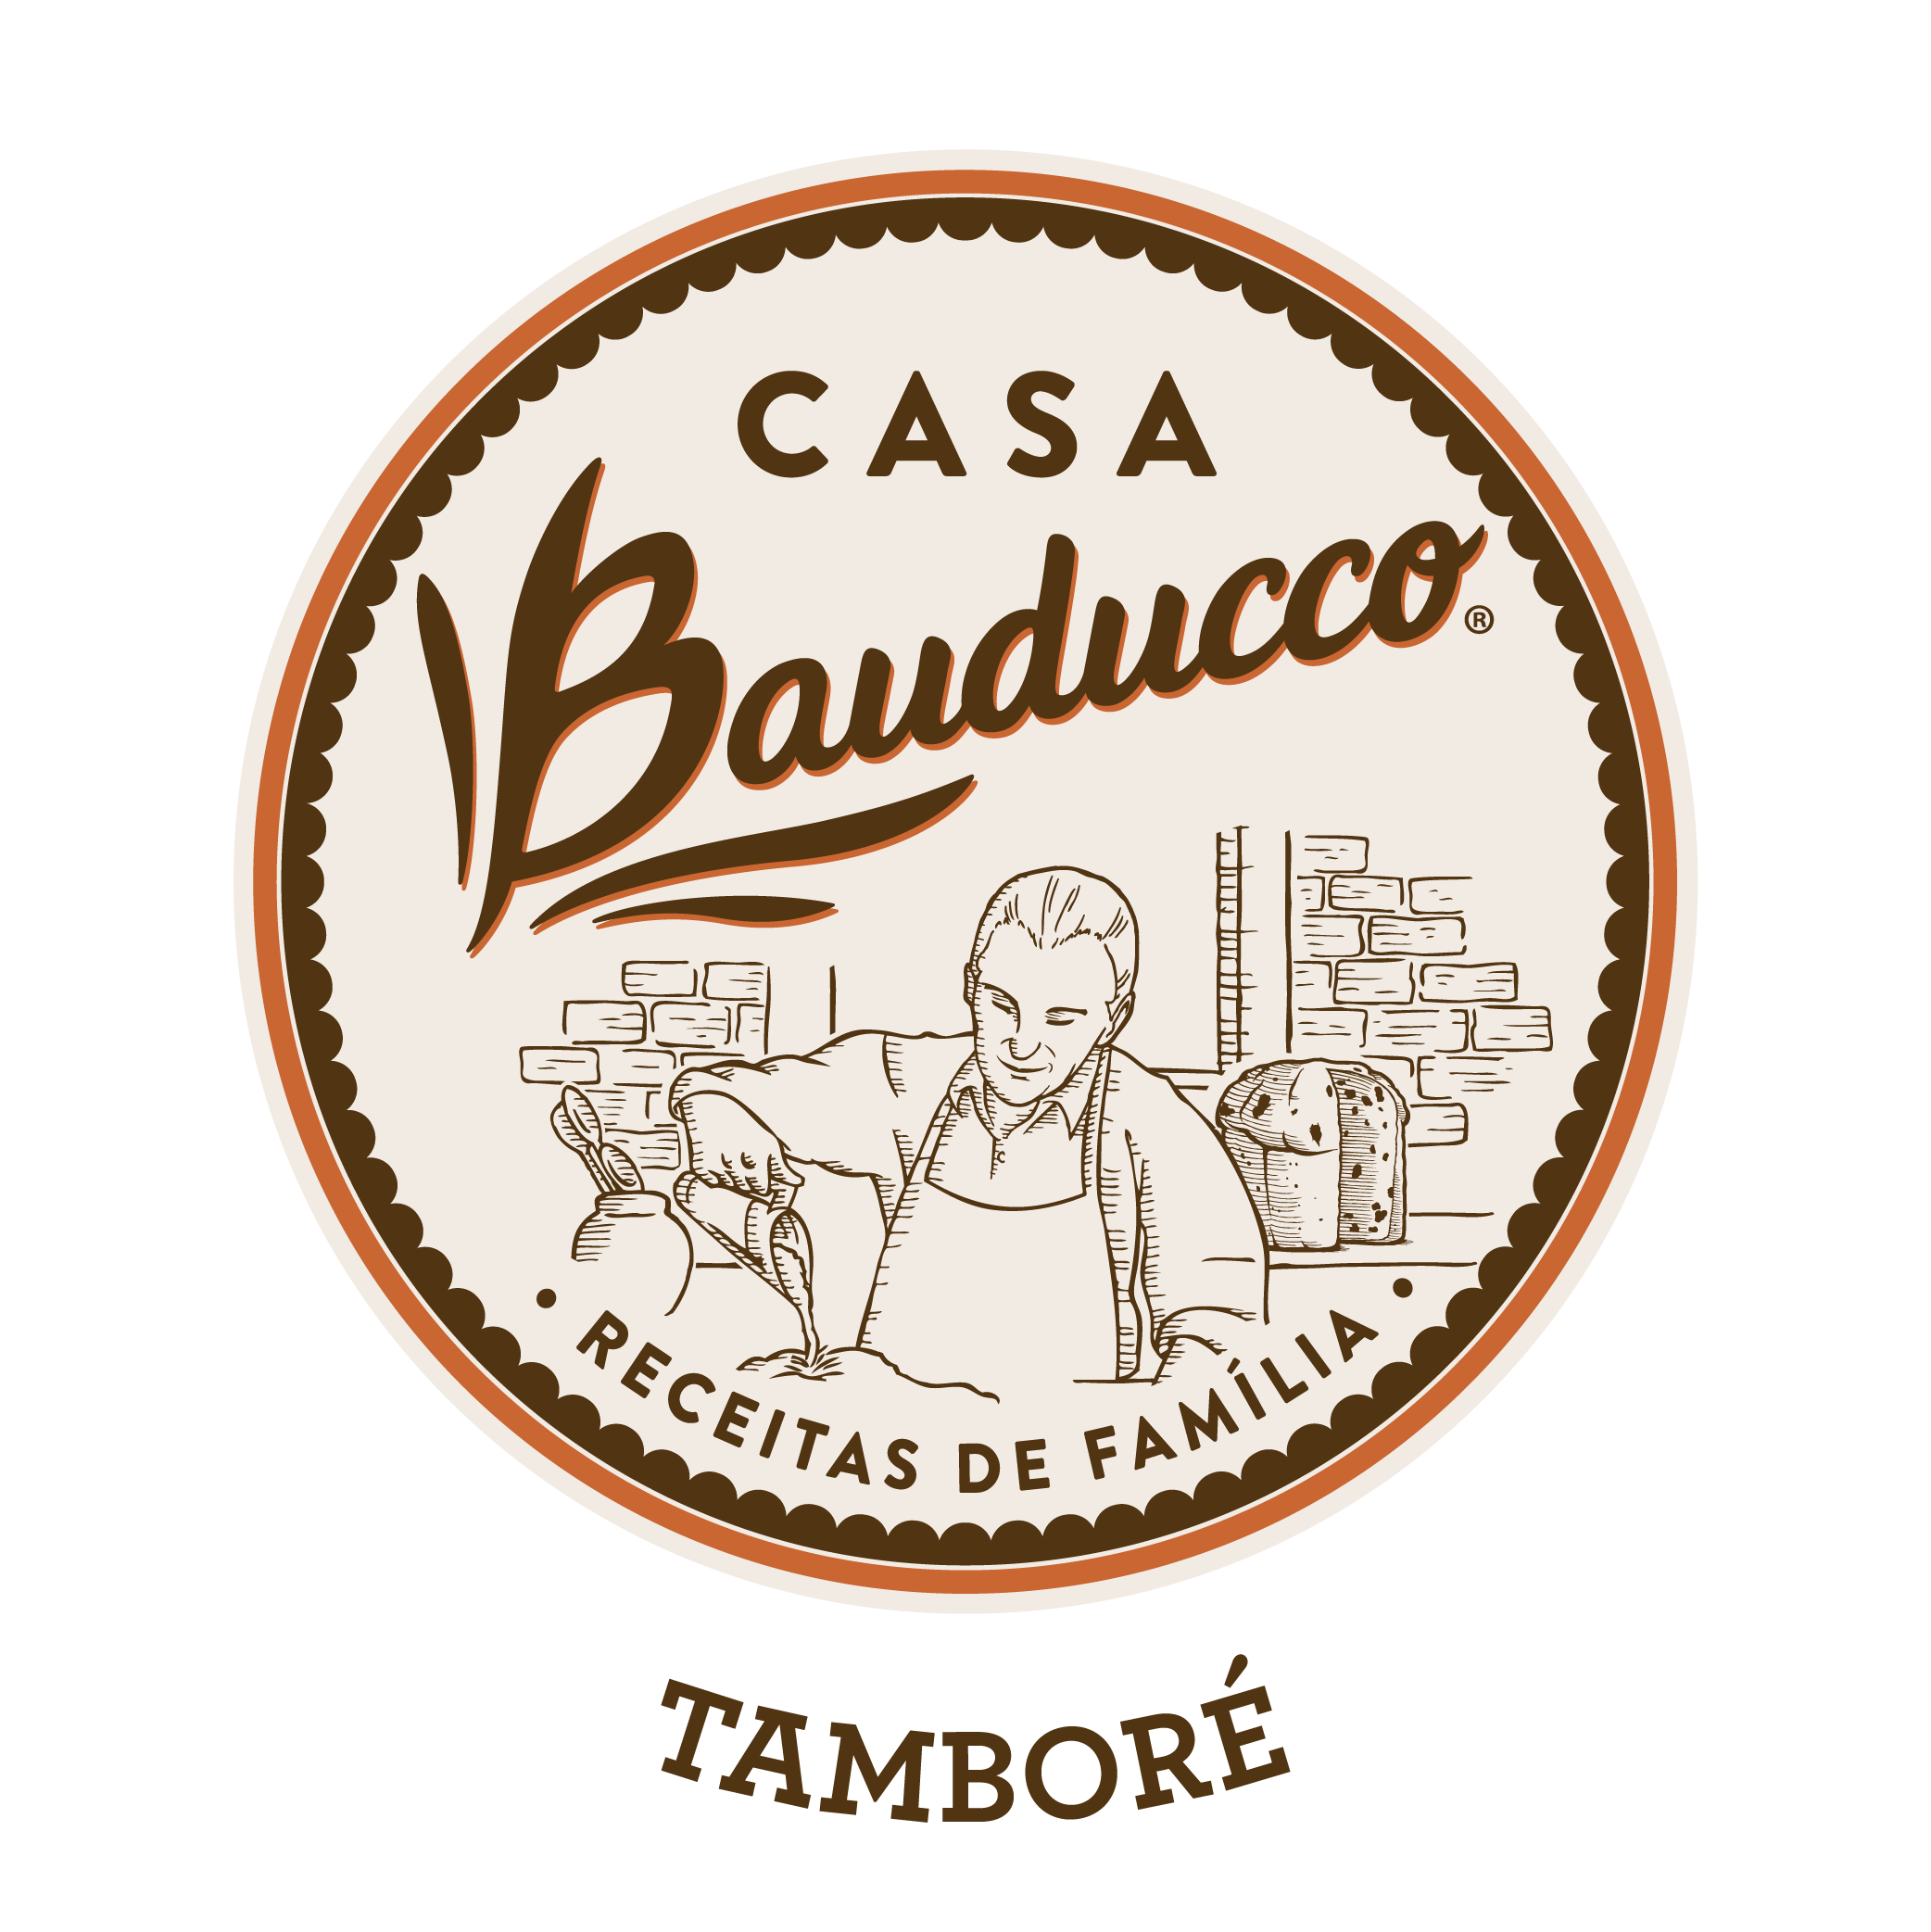  Casa Bauducco - Tamboré